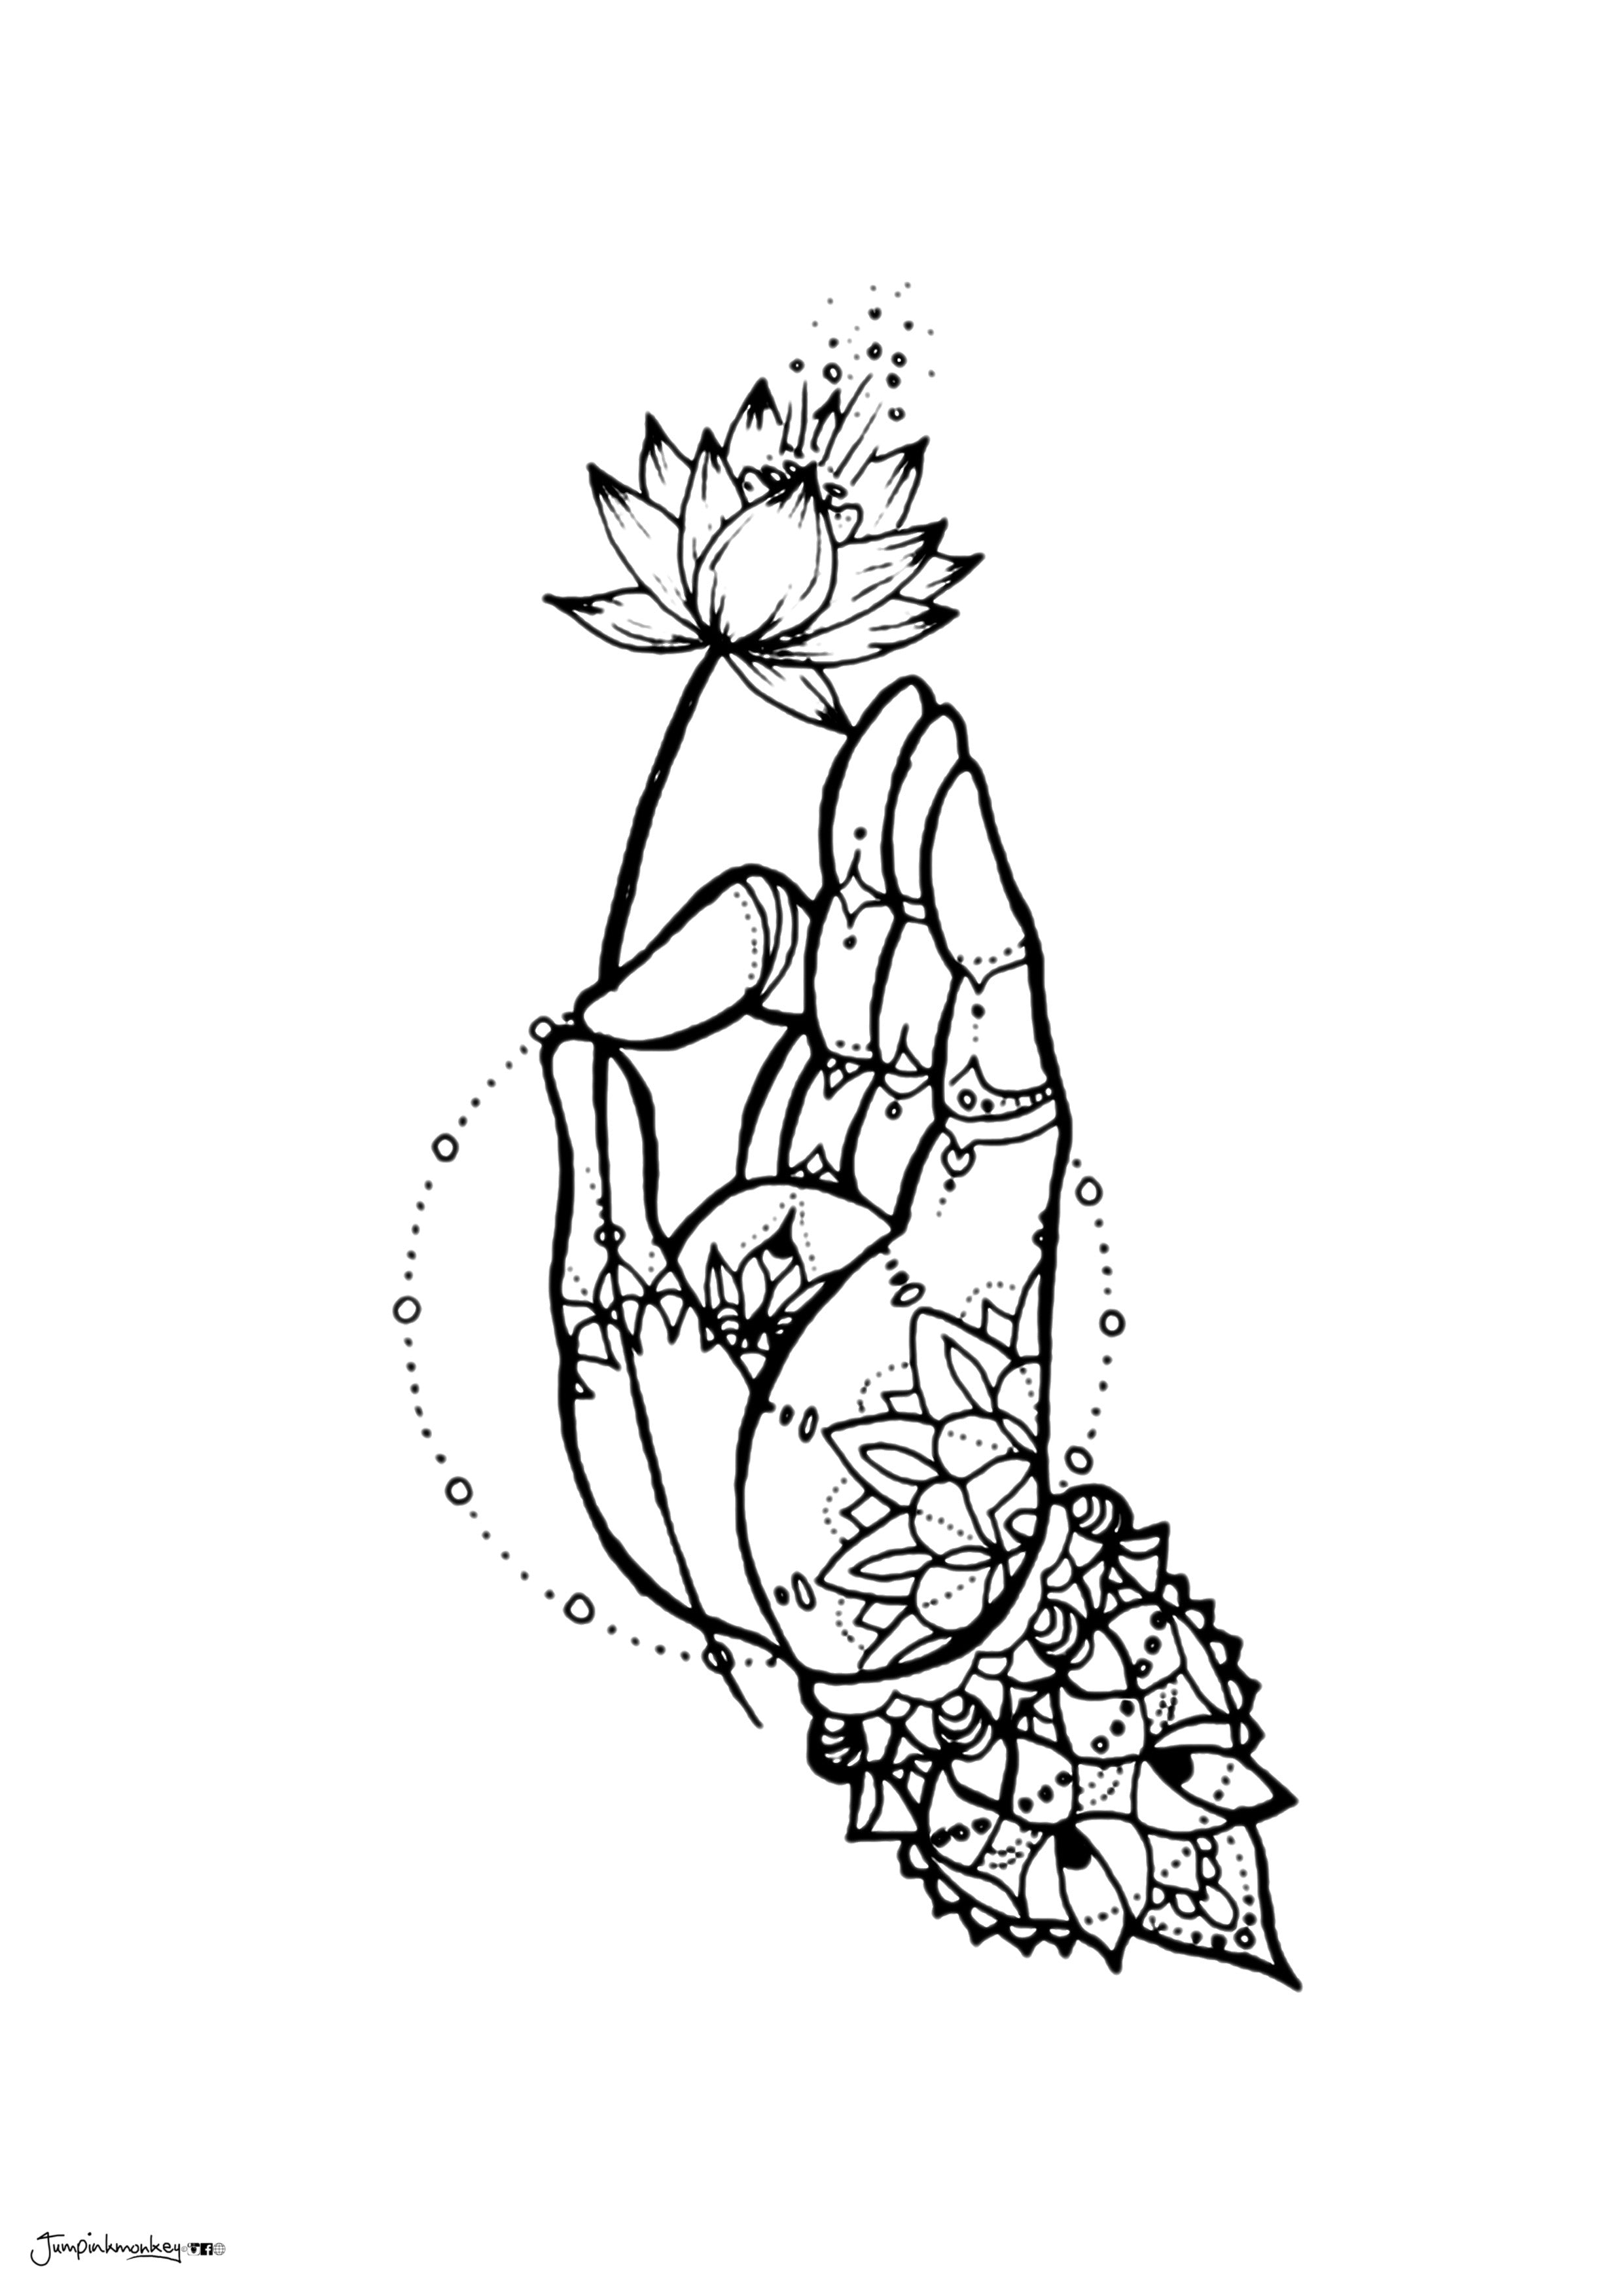 Chin mudra sketch hand holding flower spiritual